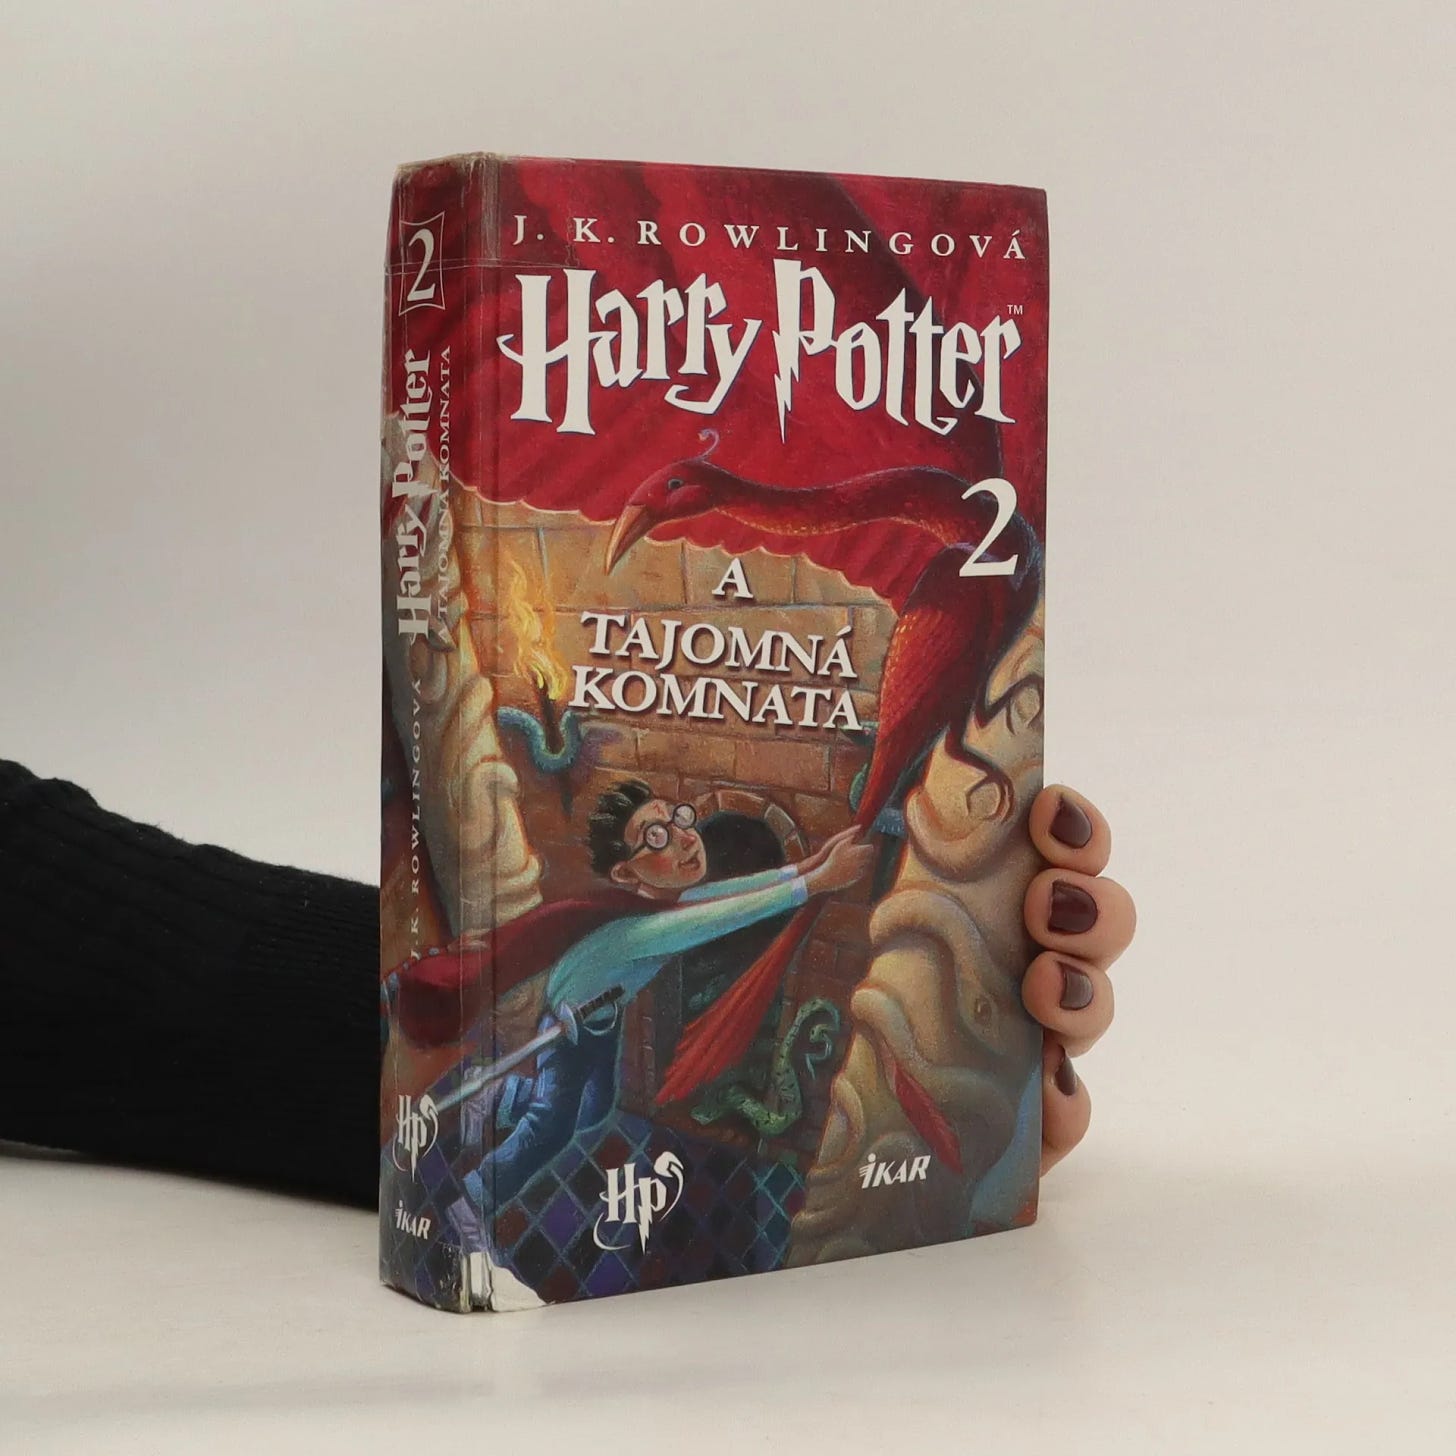 A Harry Potter book offered by a Czech online bookseller